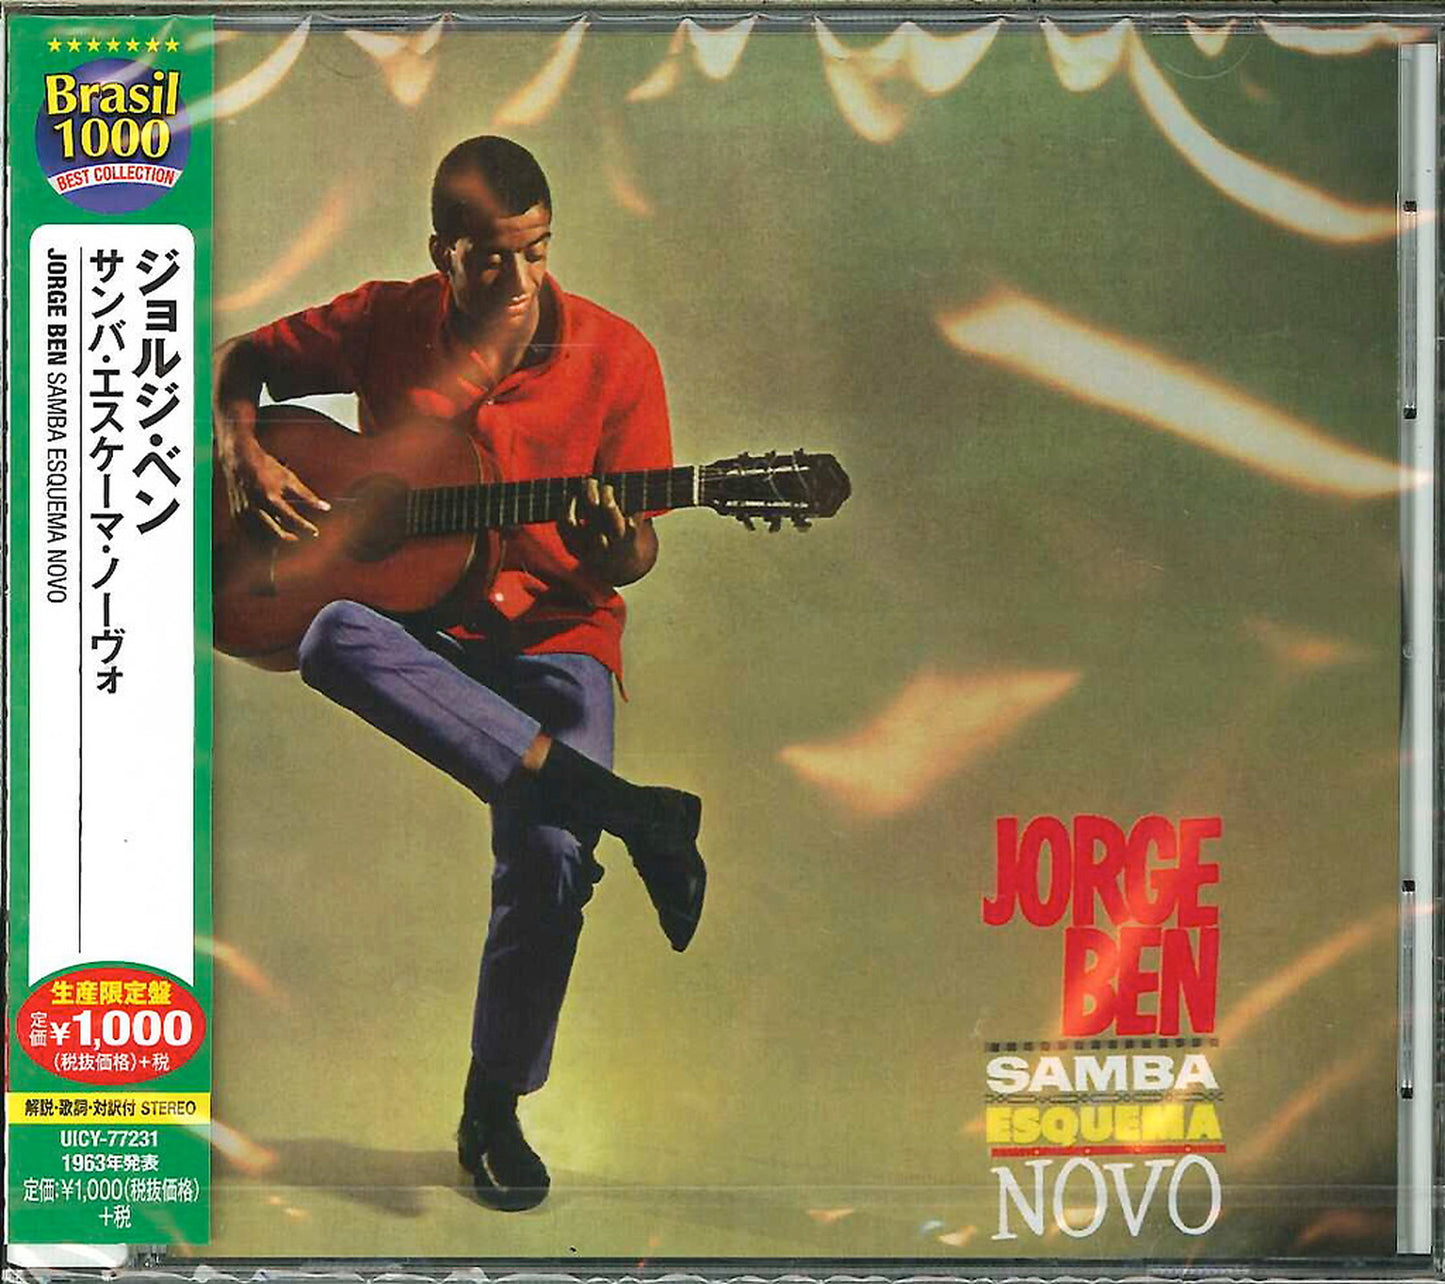 Jorge Ben Jor - Samba Esquema Novo - Japan  CD Limited Edition